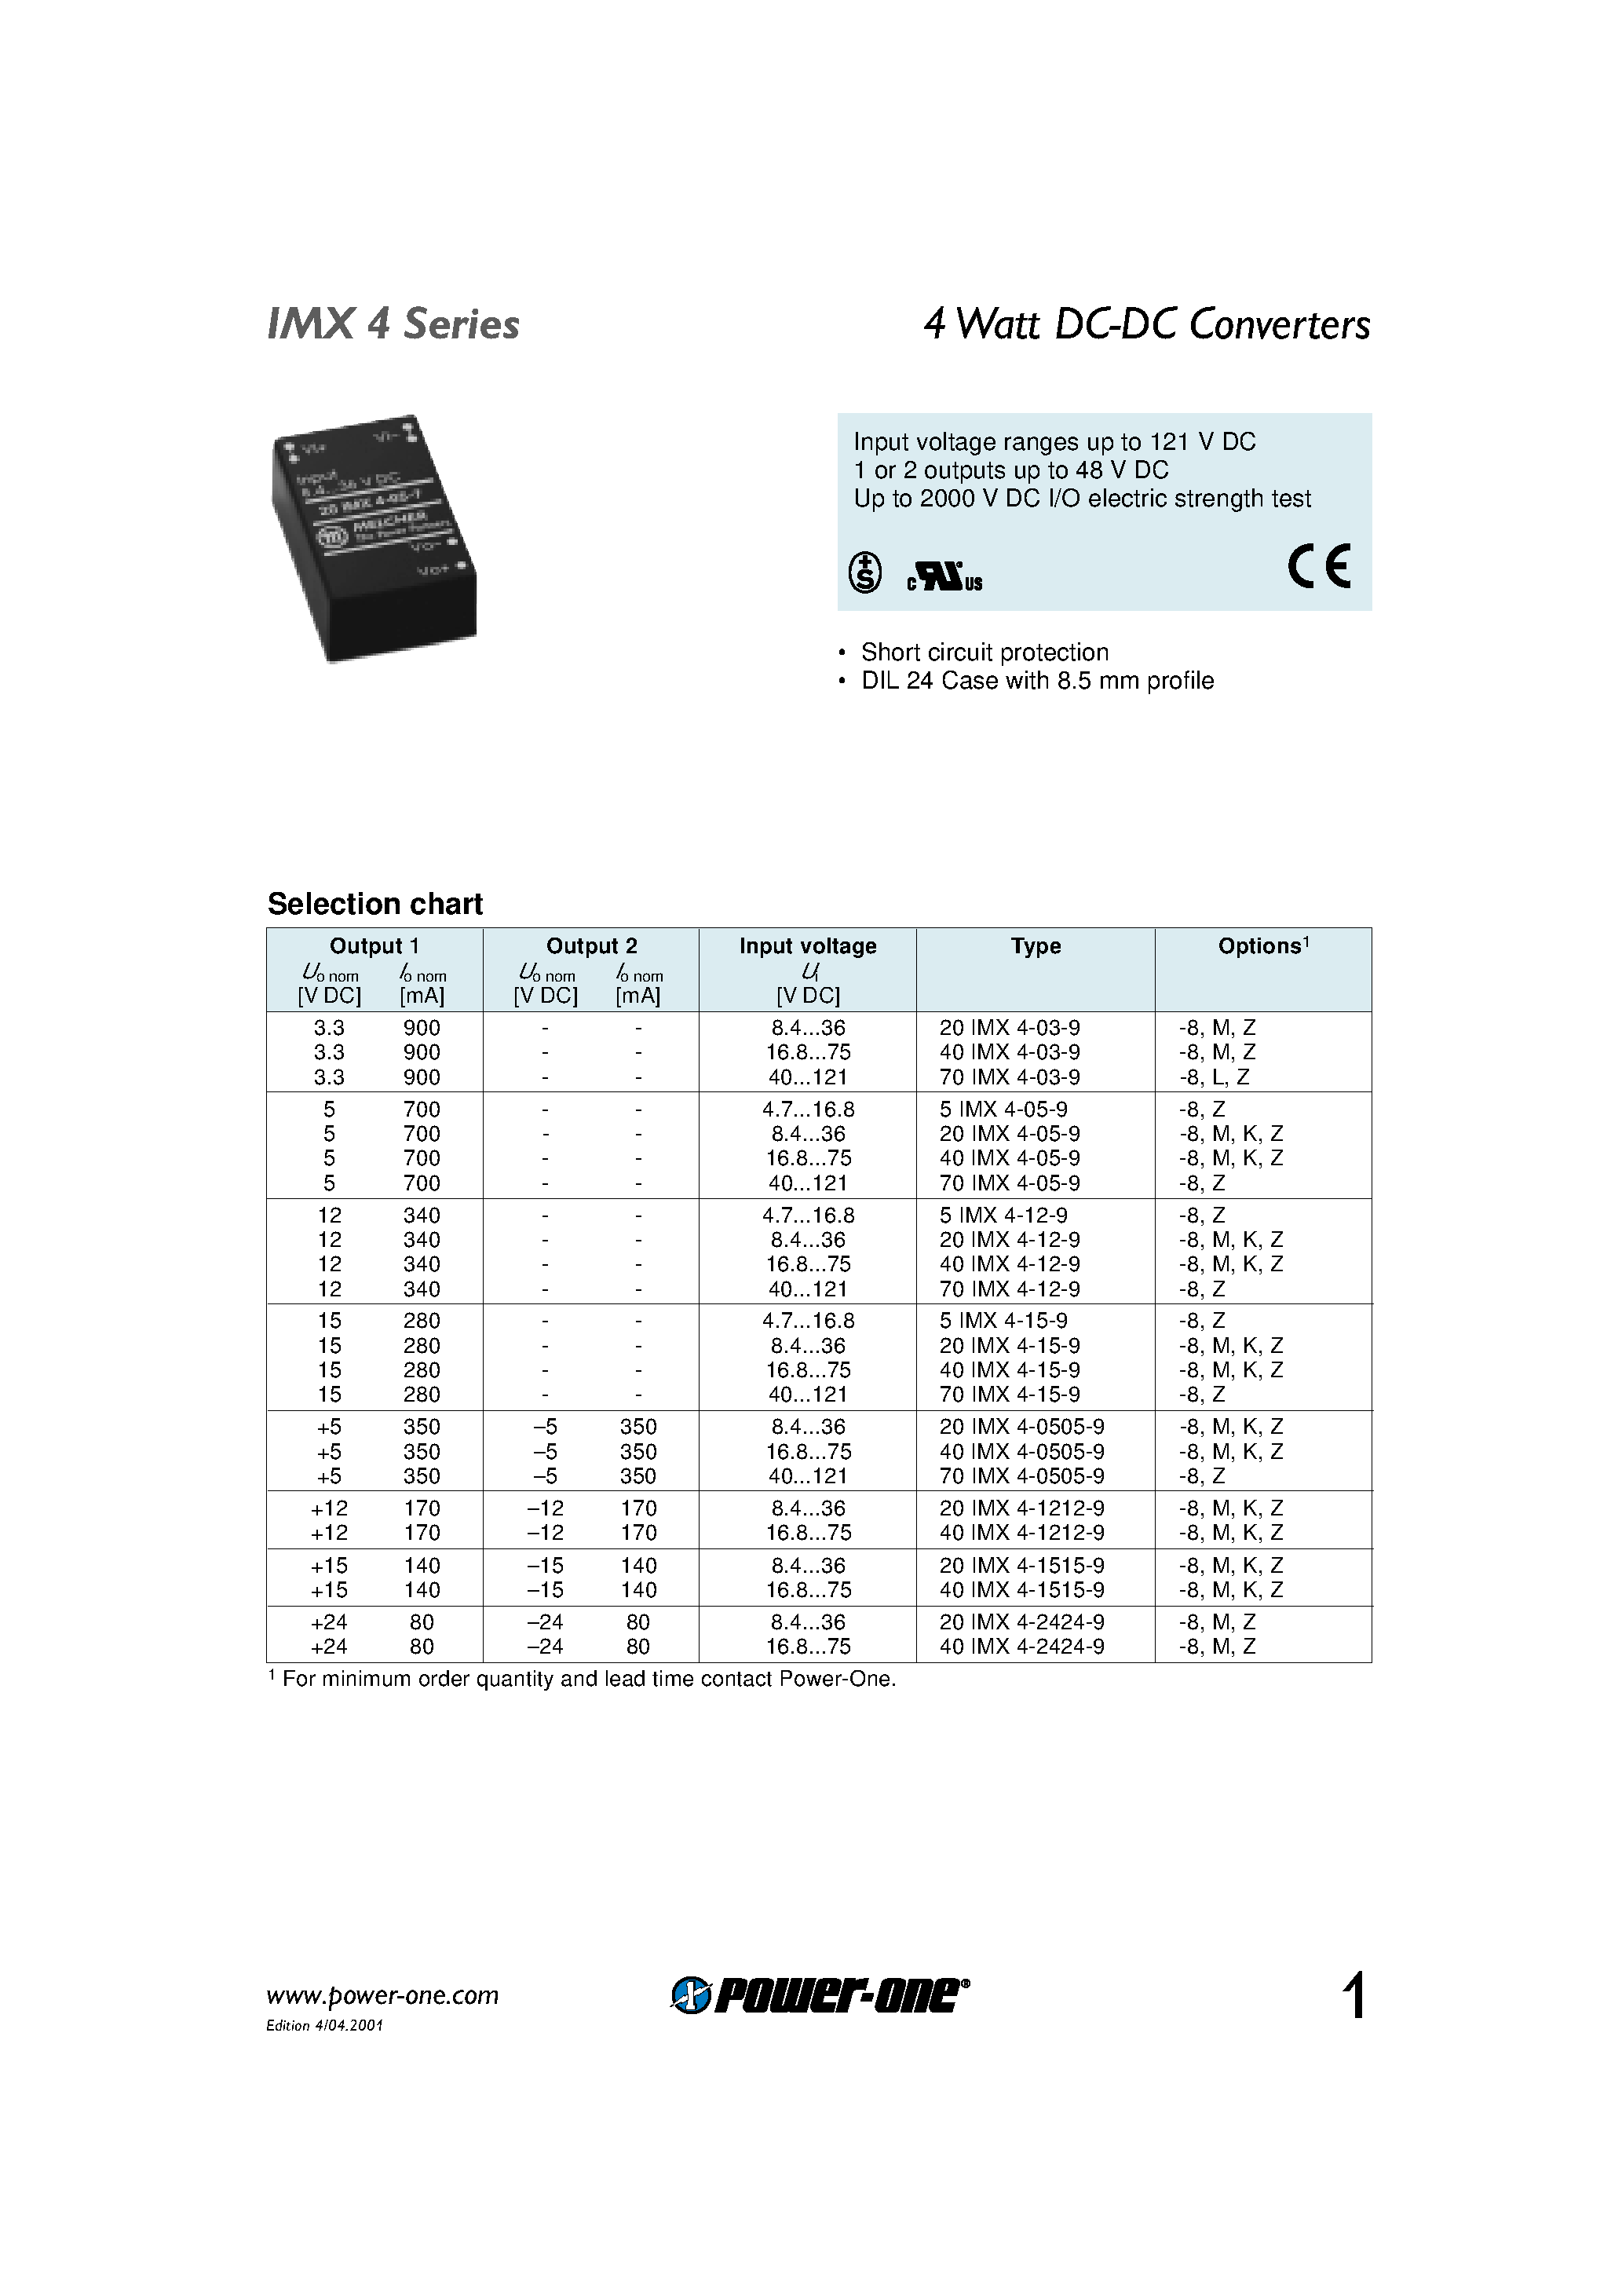 Datasheet 40IMX4-1515-9 - 4 Watt DC-DC Converters page 1